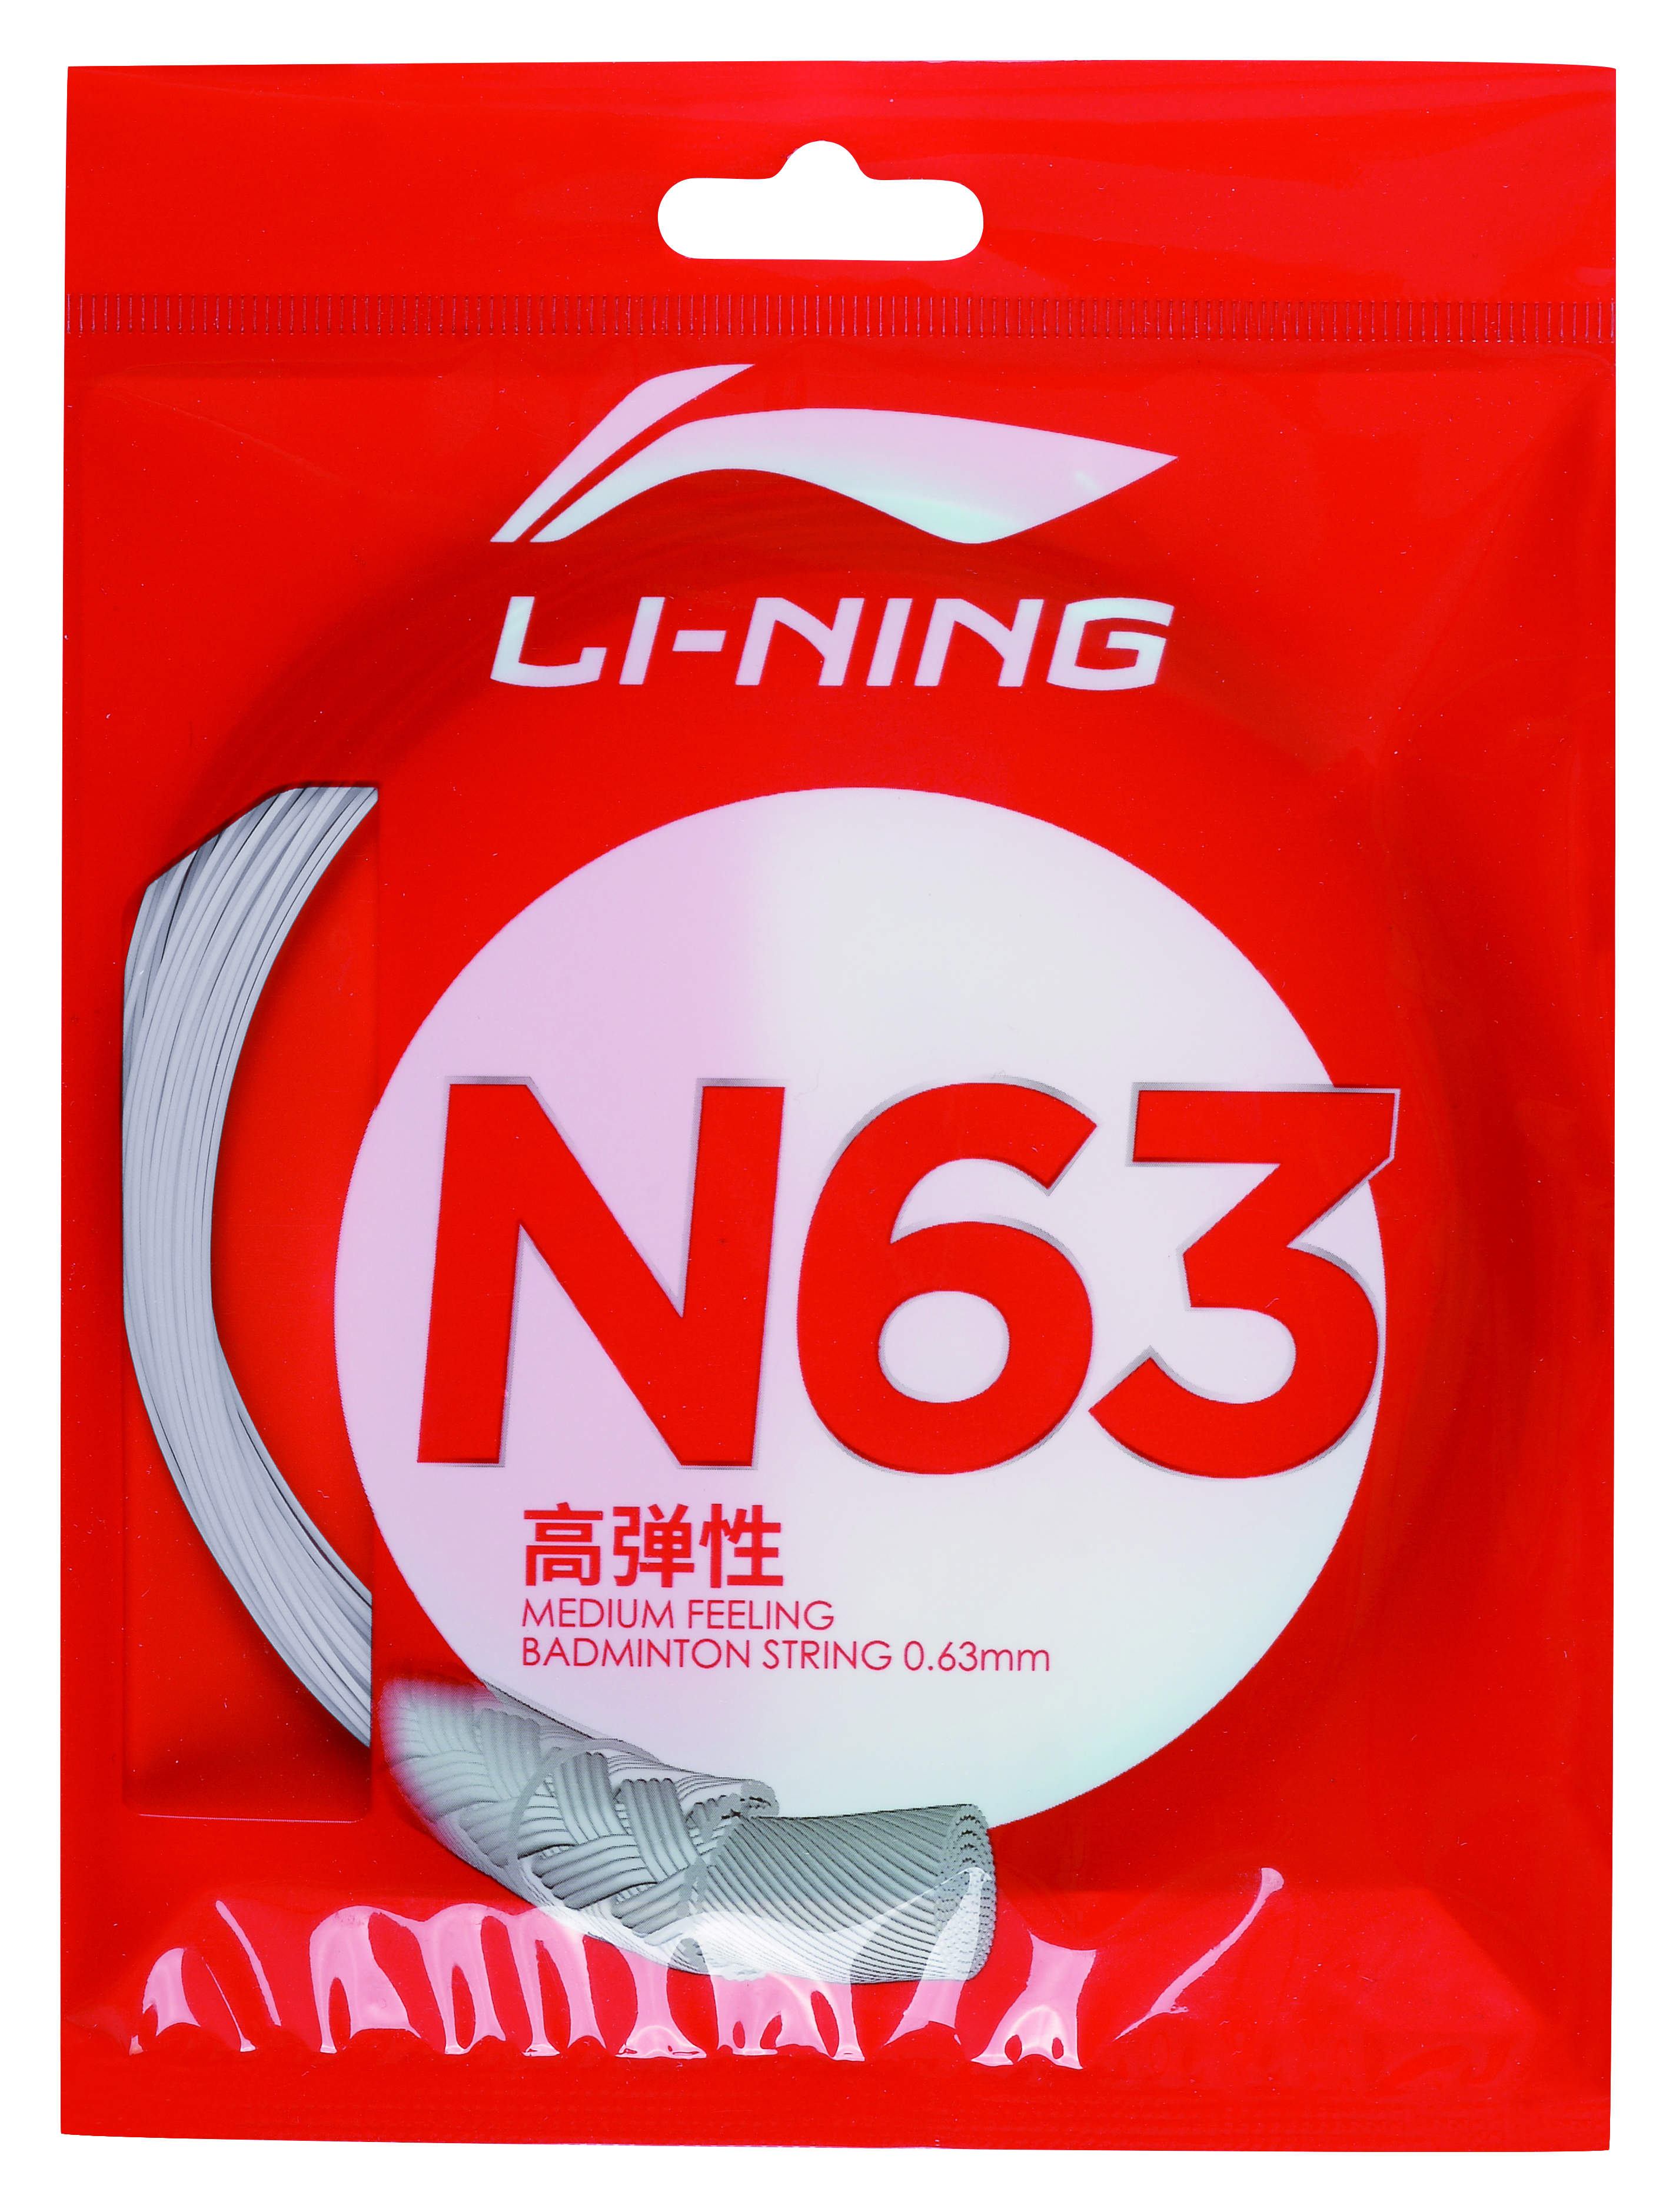 Li-Ning Badmintonsaite N63 im 10m-Set weiß